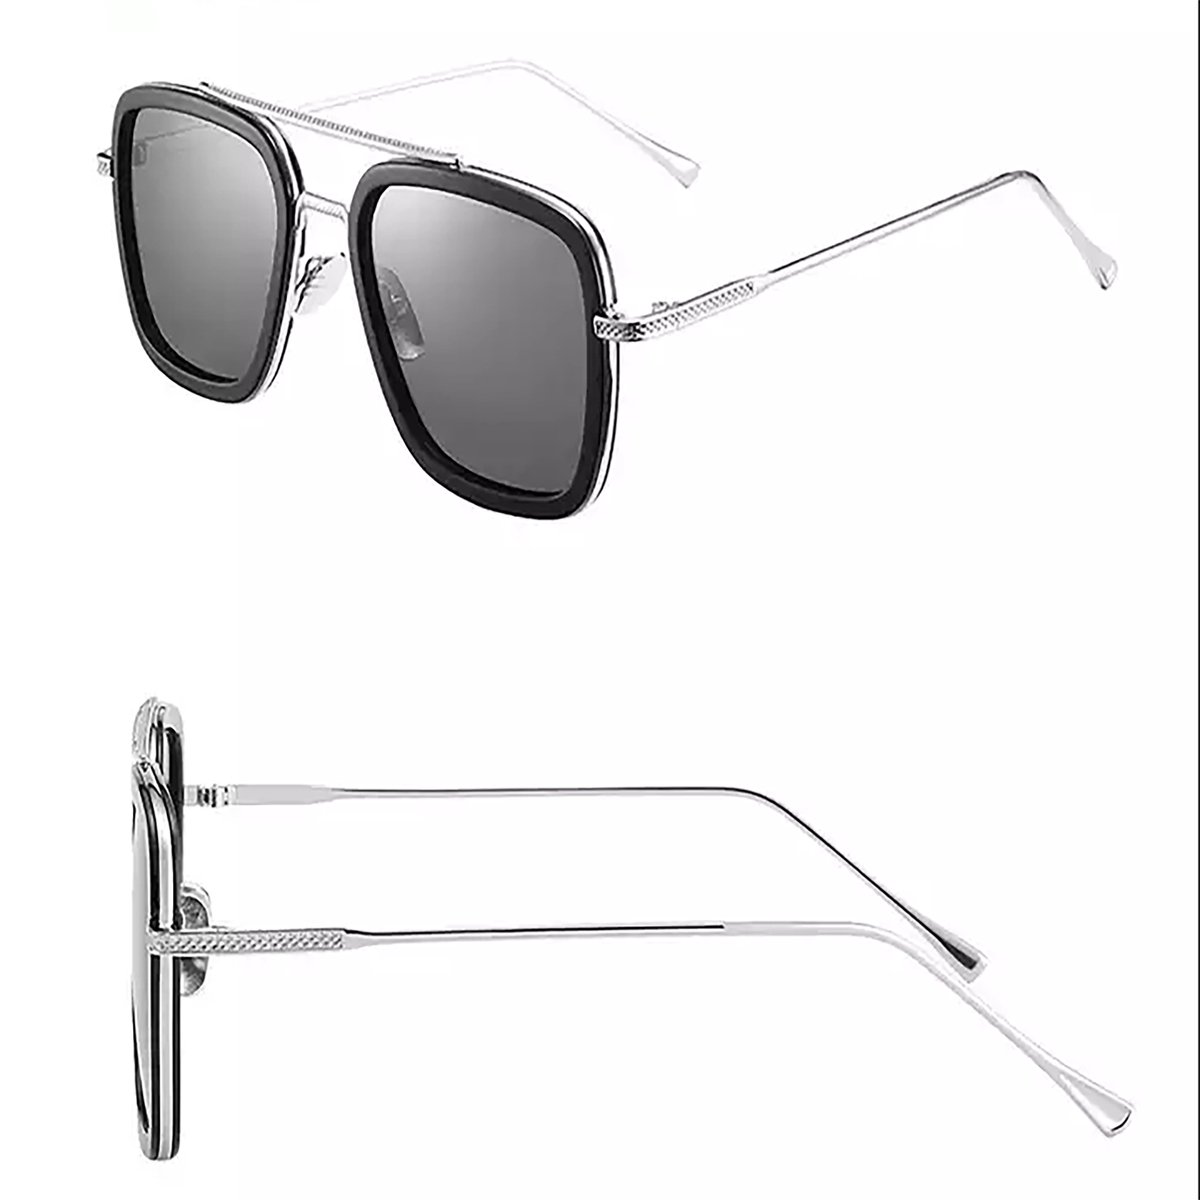 Tony Stark bril - Zonnebrillen- Zwarte glazen - Kleding accessoires